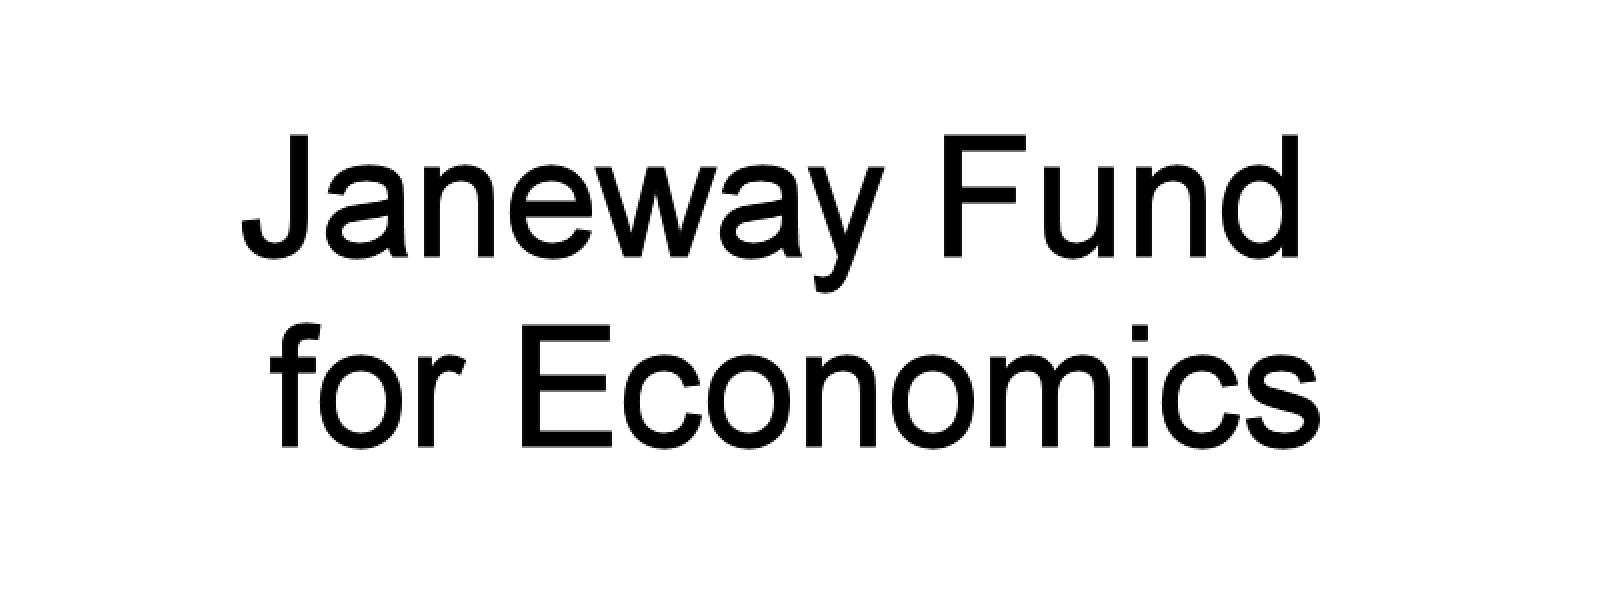 Janeway Fund for Economics